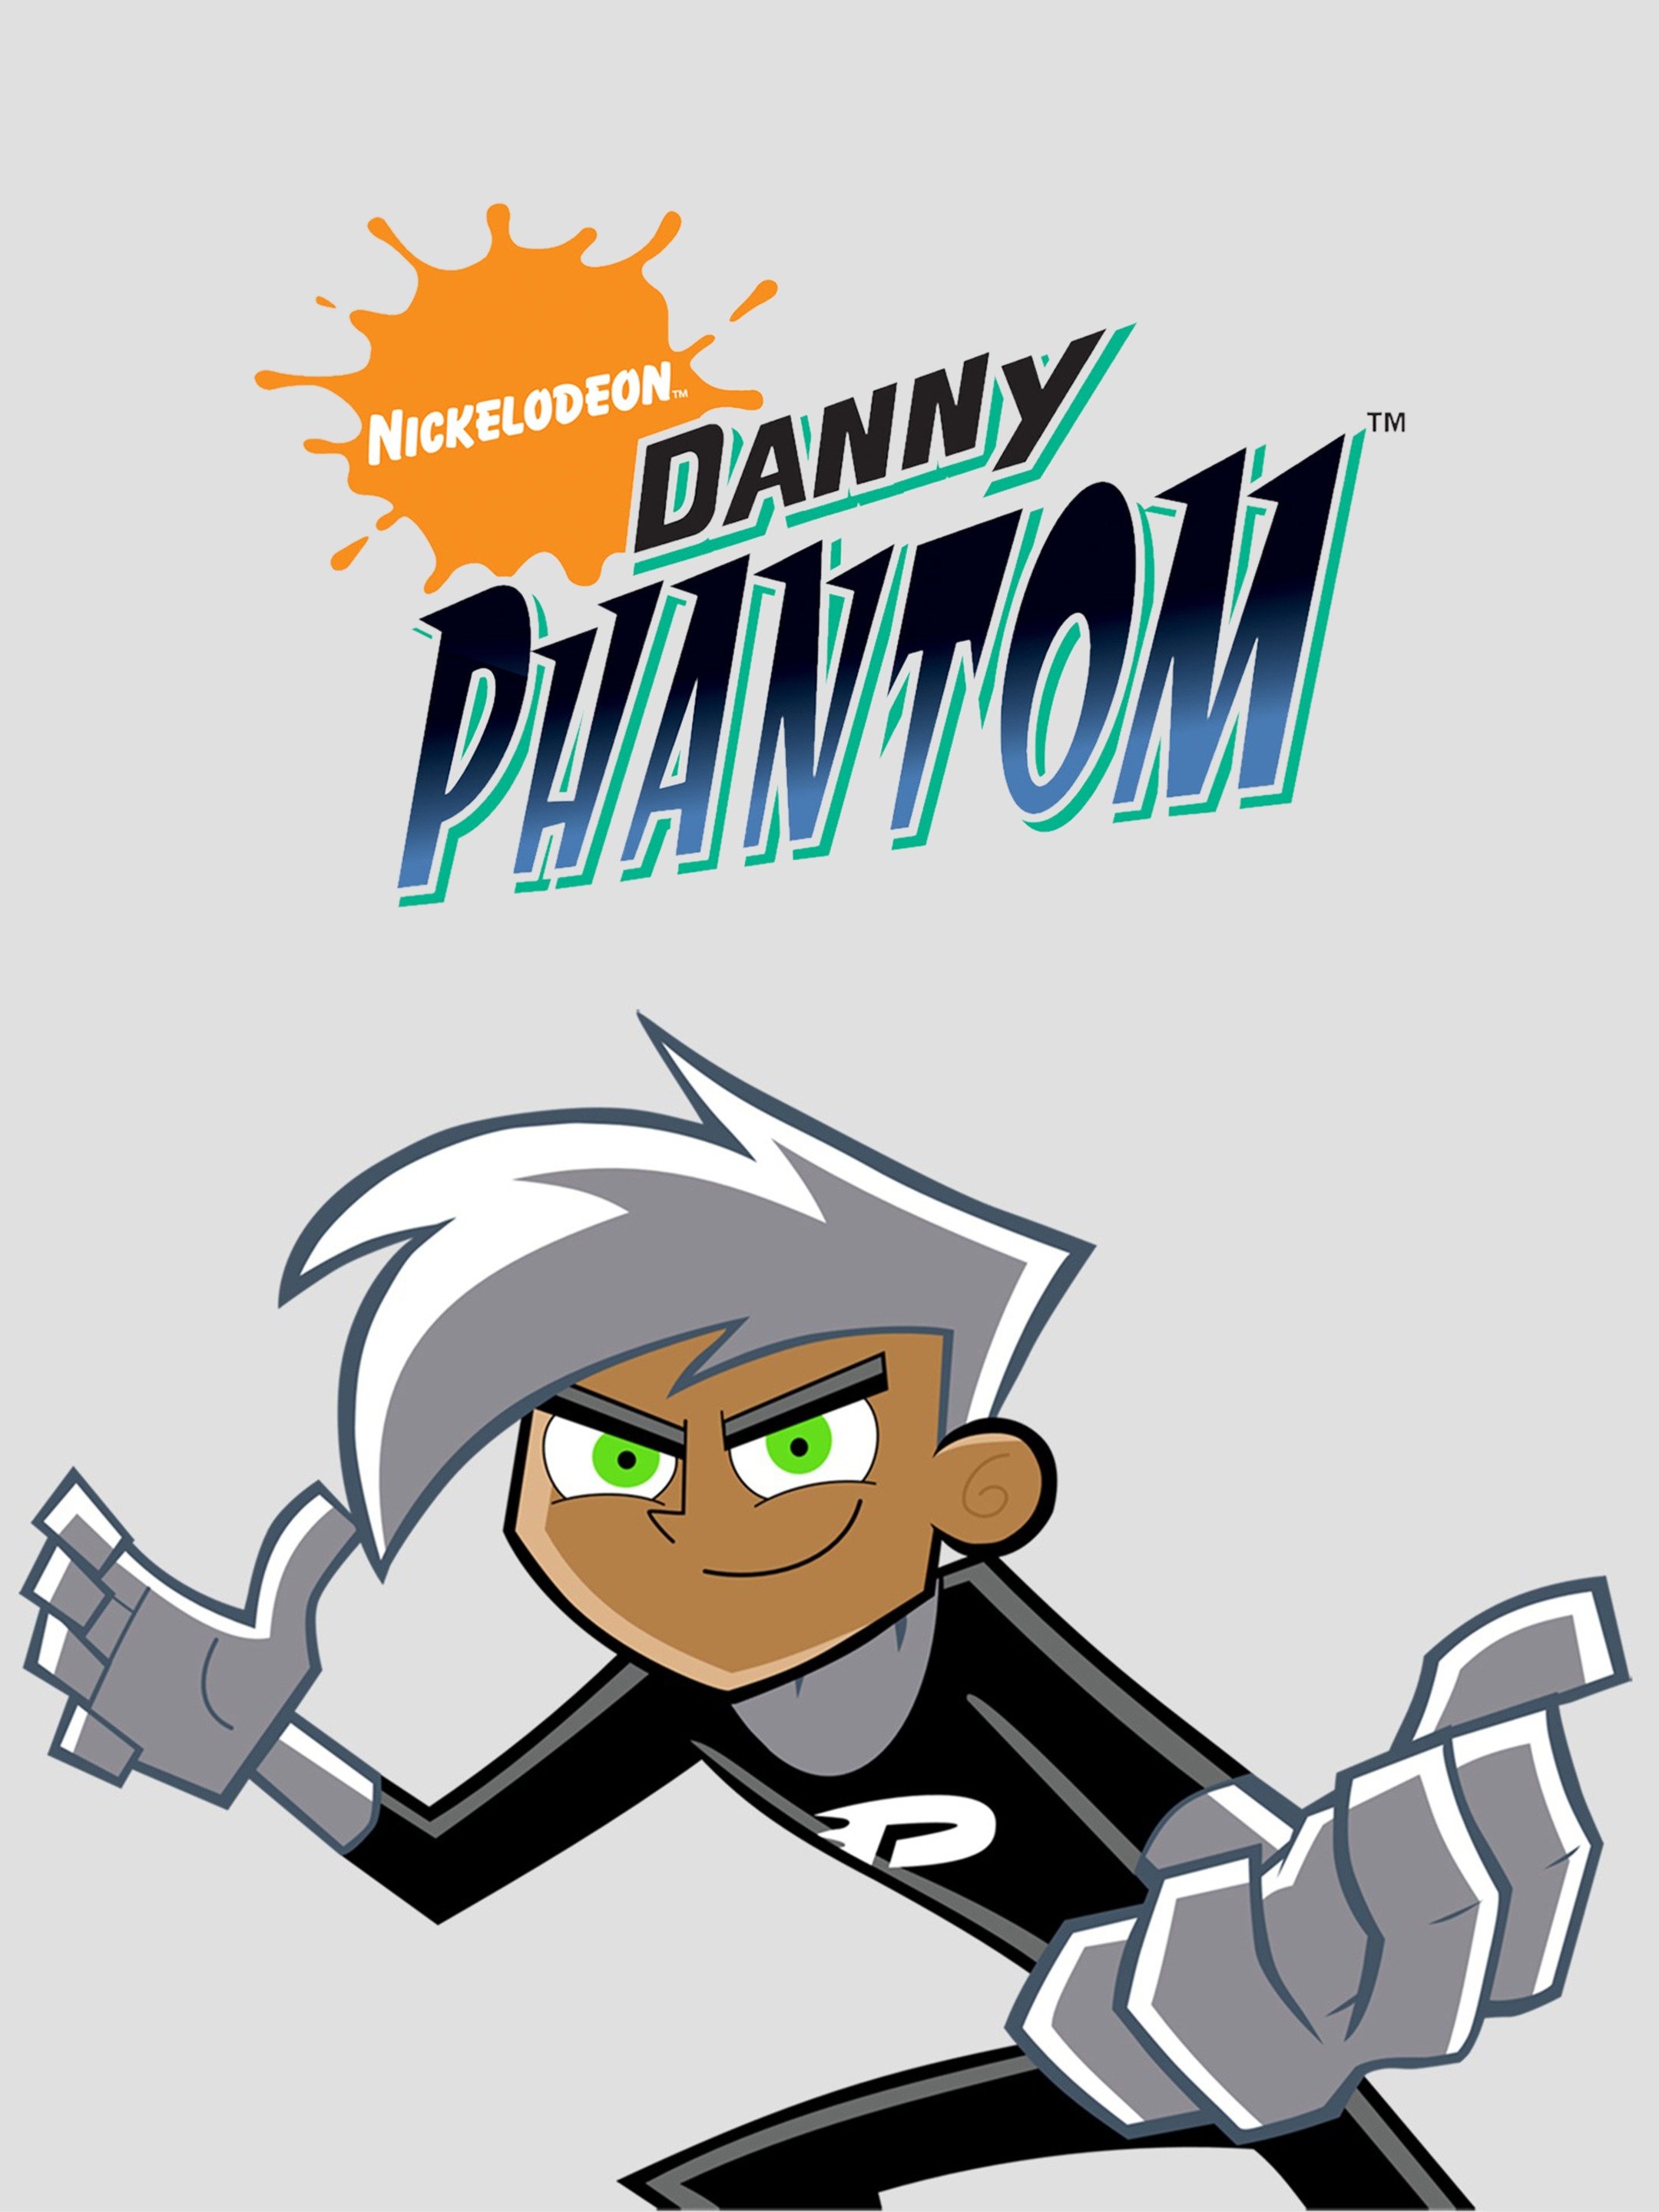 writer danny phantom